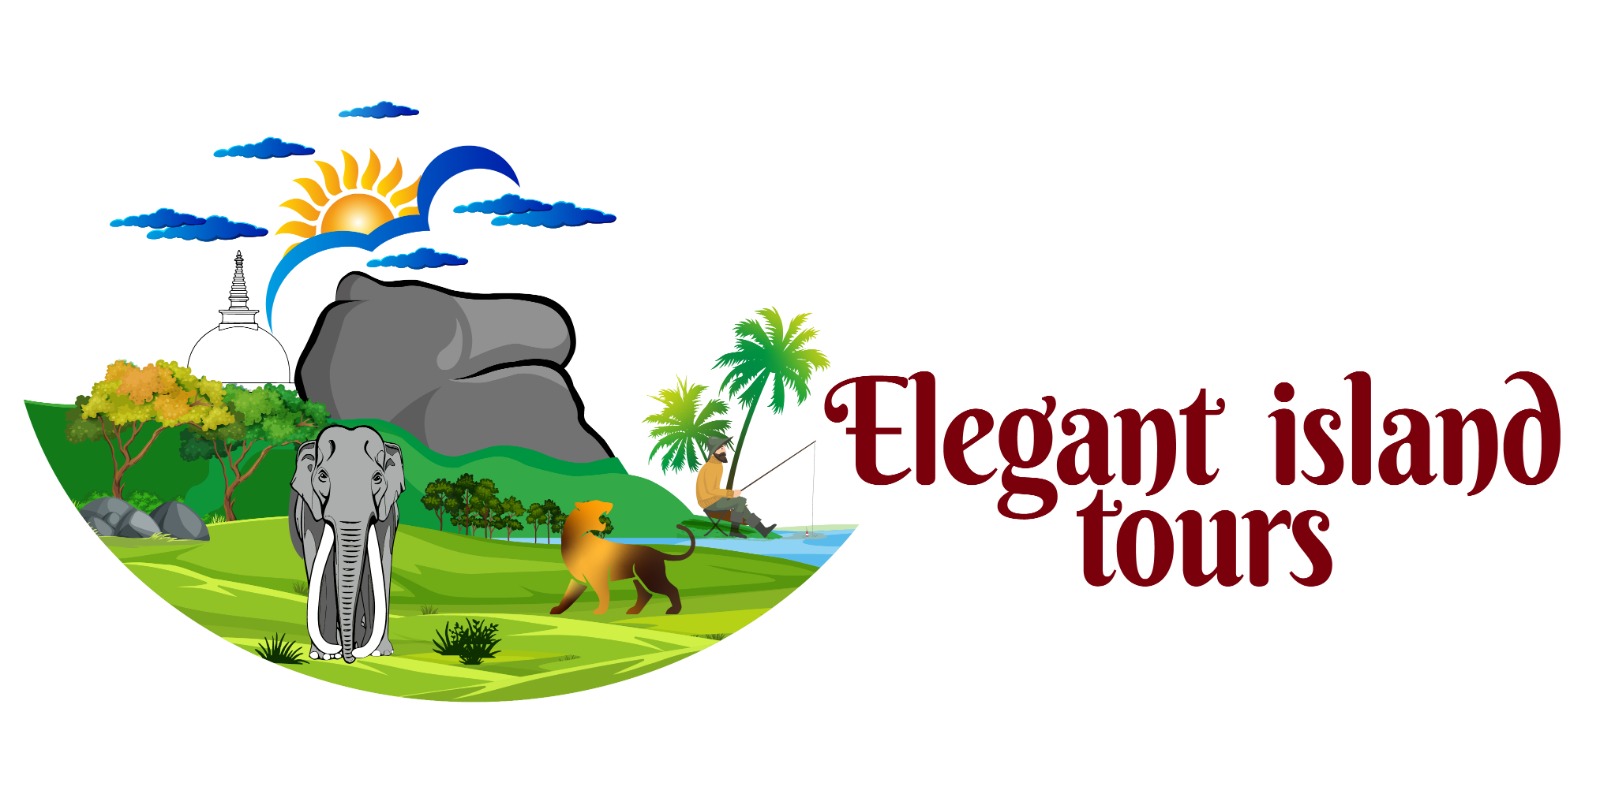 Elgant Island Tours